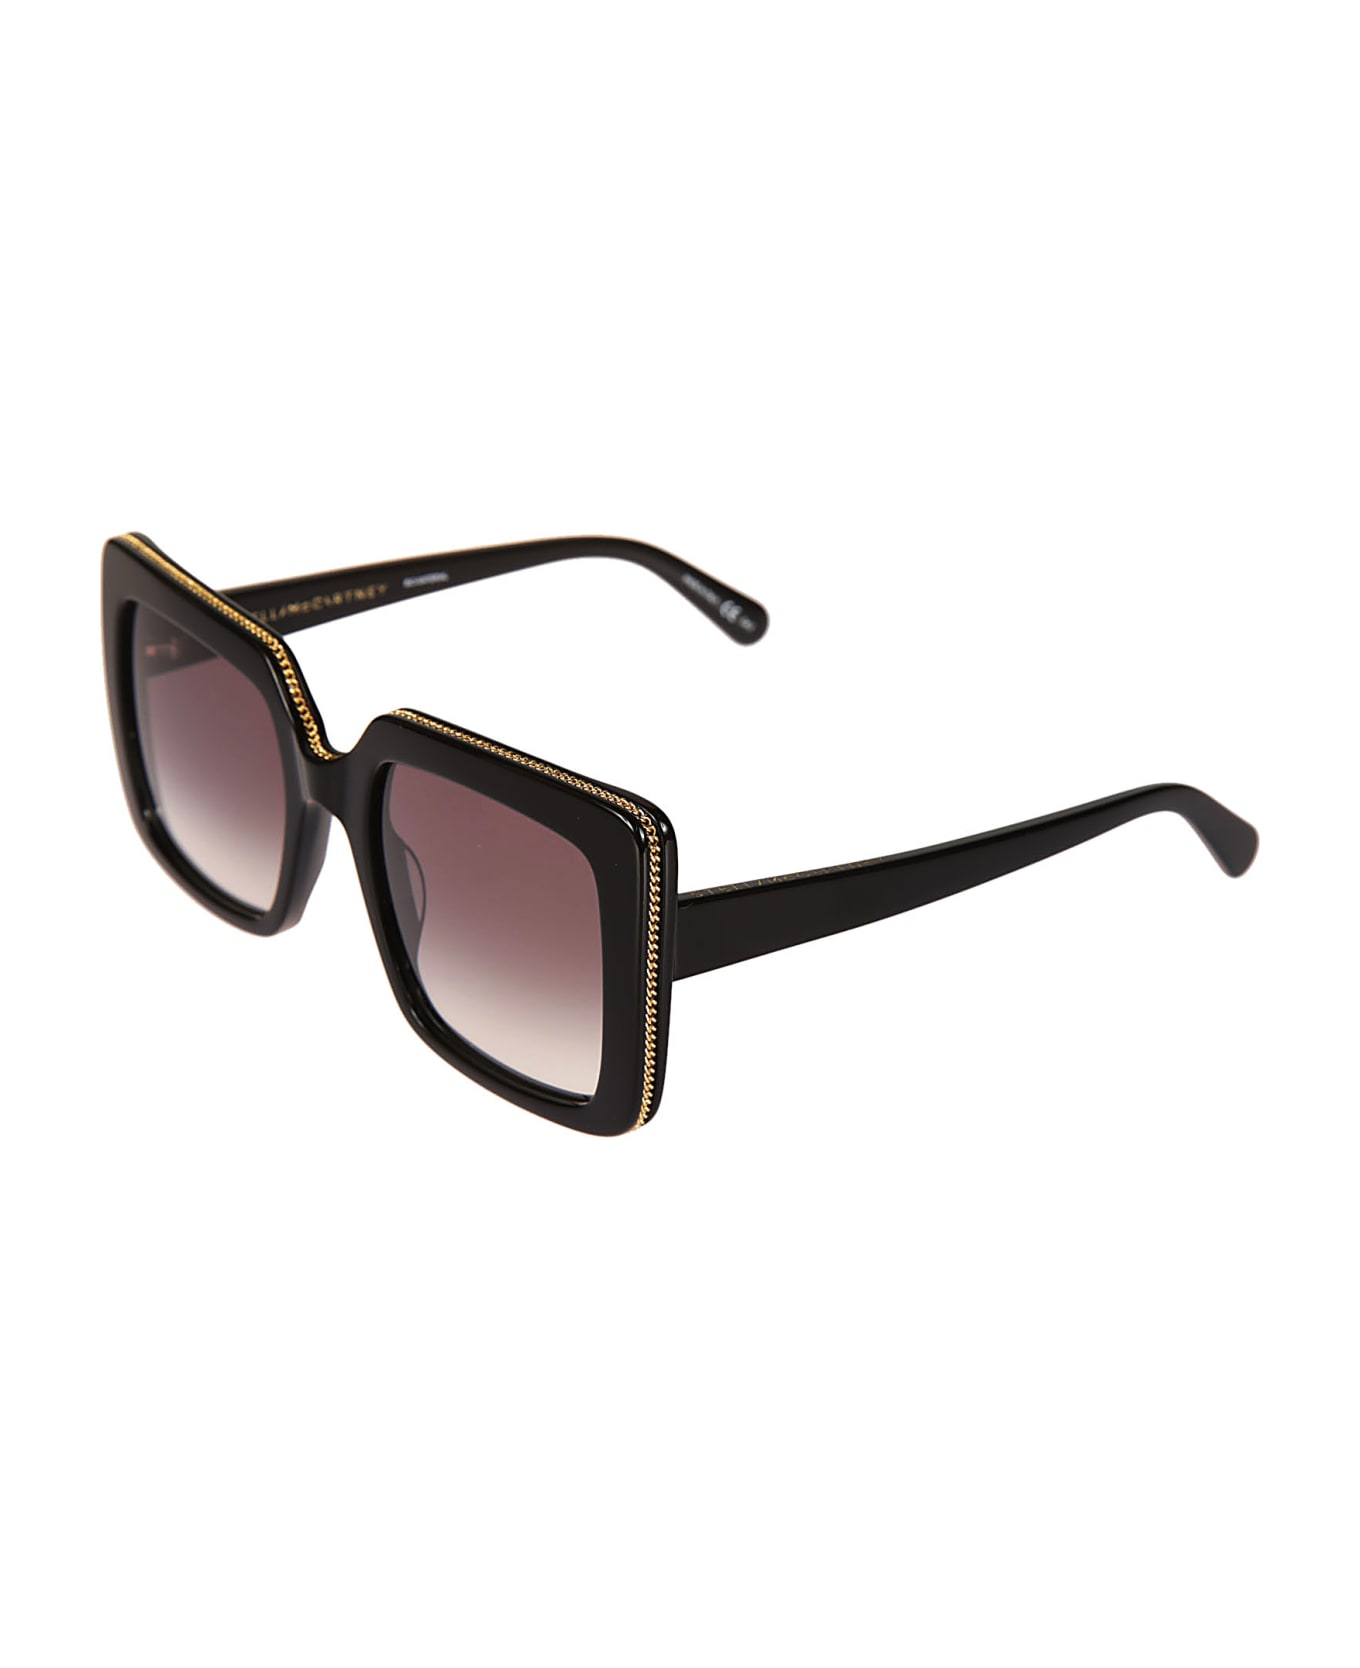 Stella McCartney Eyewear Squared Sunglasses - Black